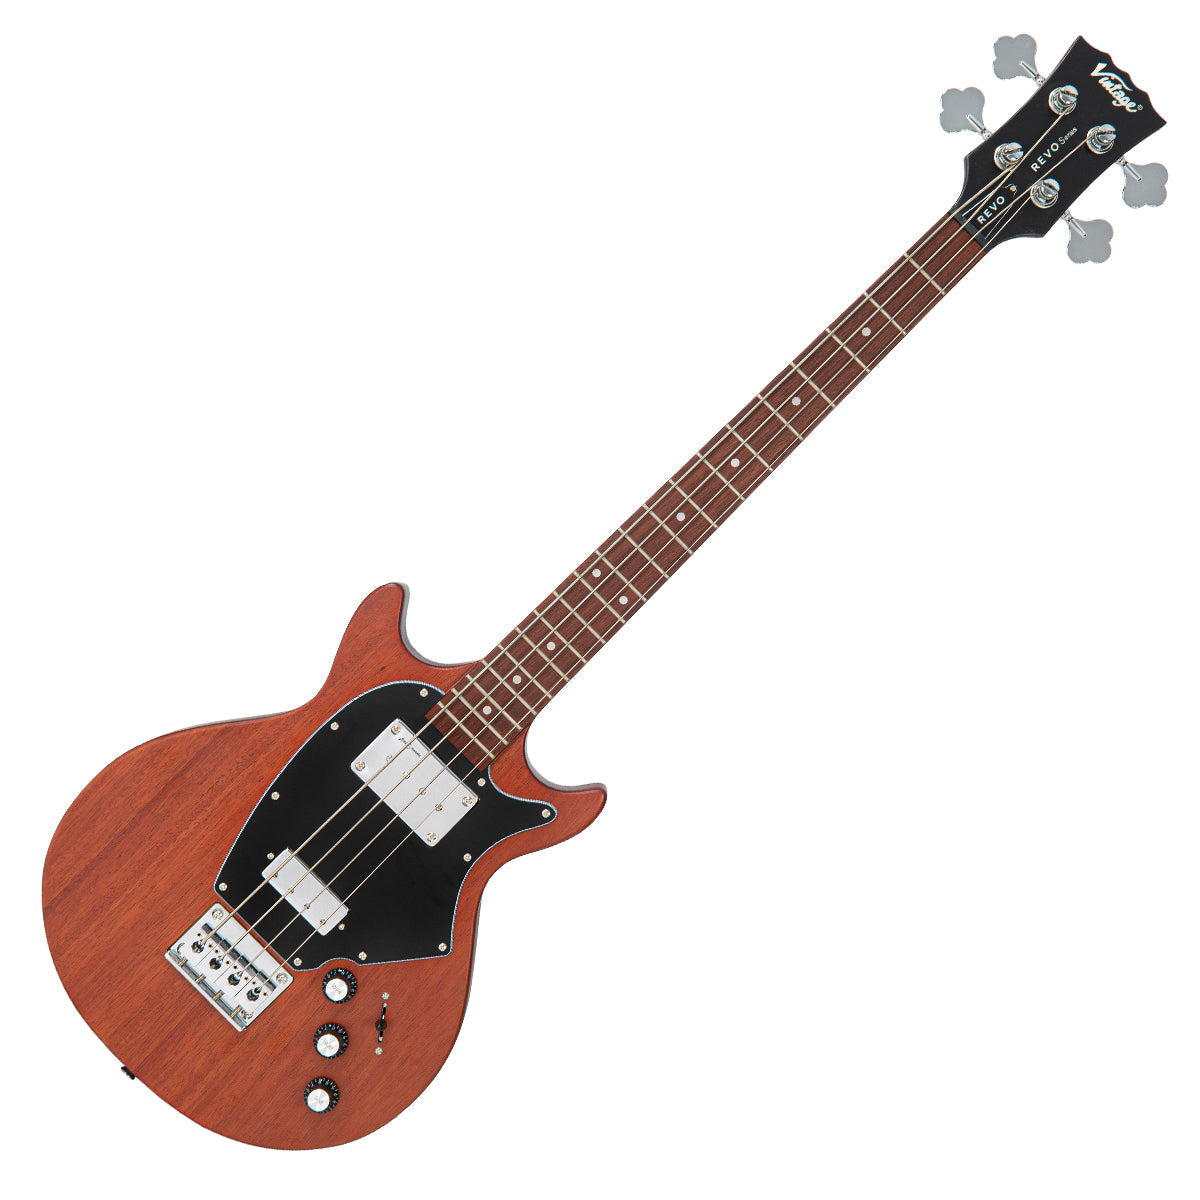 Vintage REVO Series 'Callan' Bass ~ Mahogany, Electric Guitars for sale at Richards Guitars.